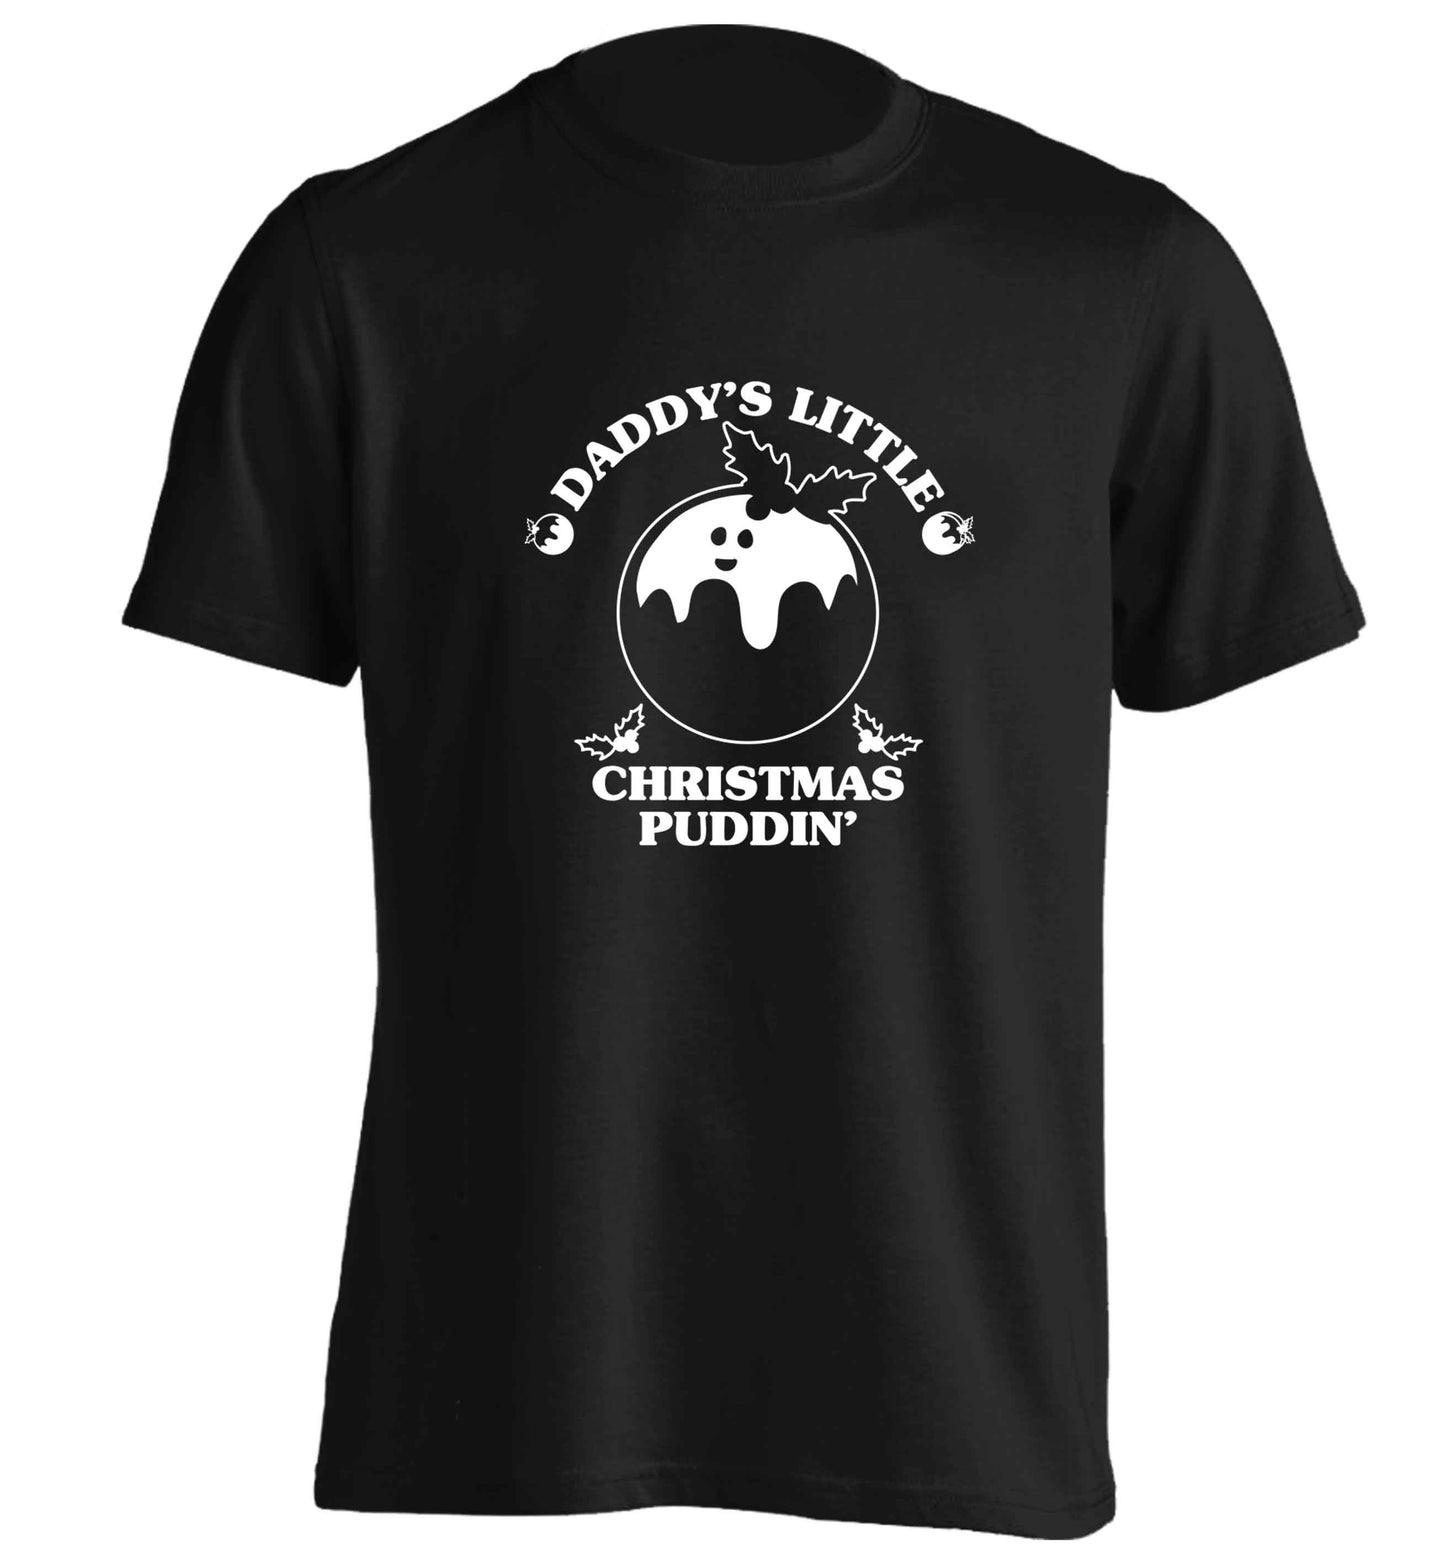 Daddy's little Christmas puddin' adults unisex black Tshirt 2XL